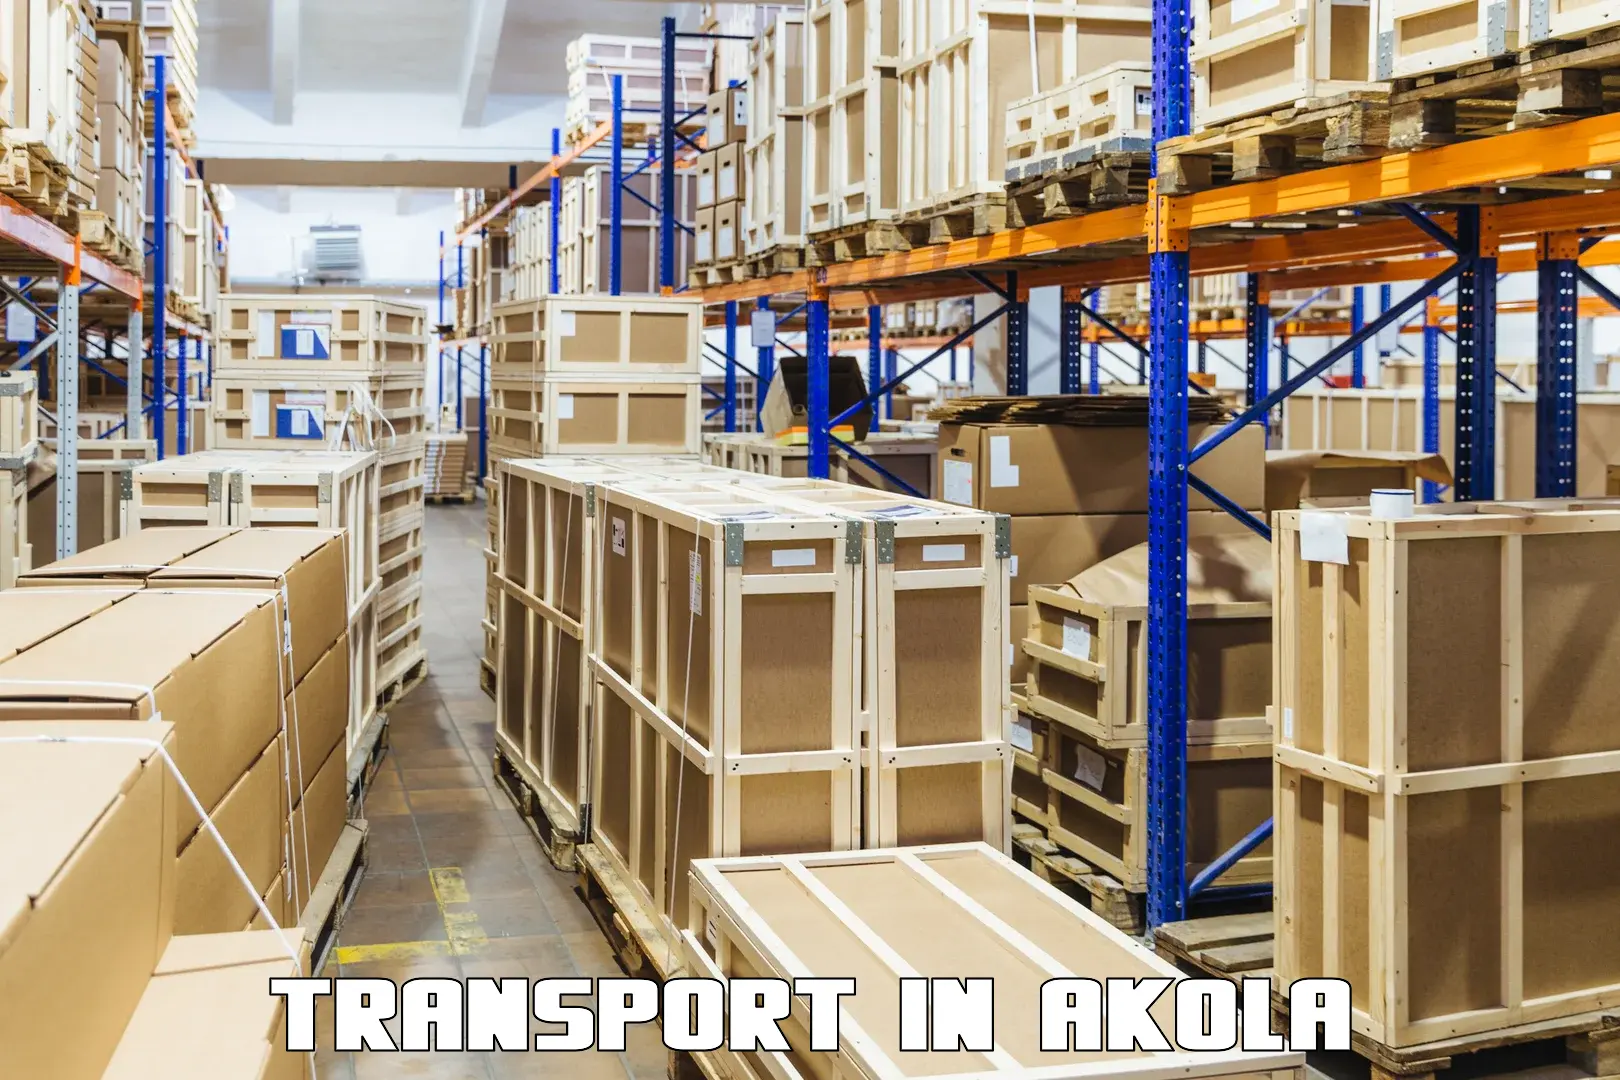 Daily parcel service transport in Akola